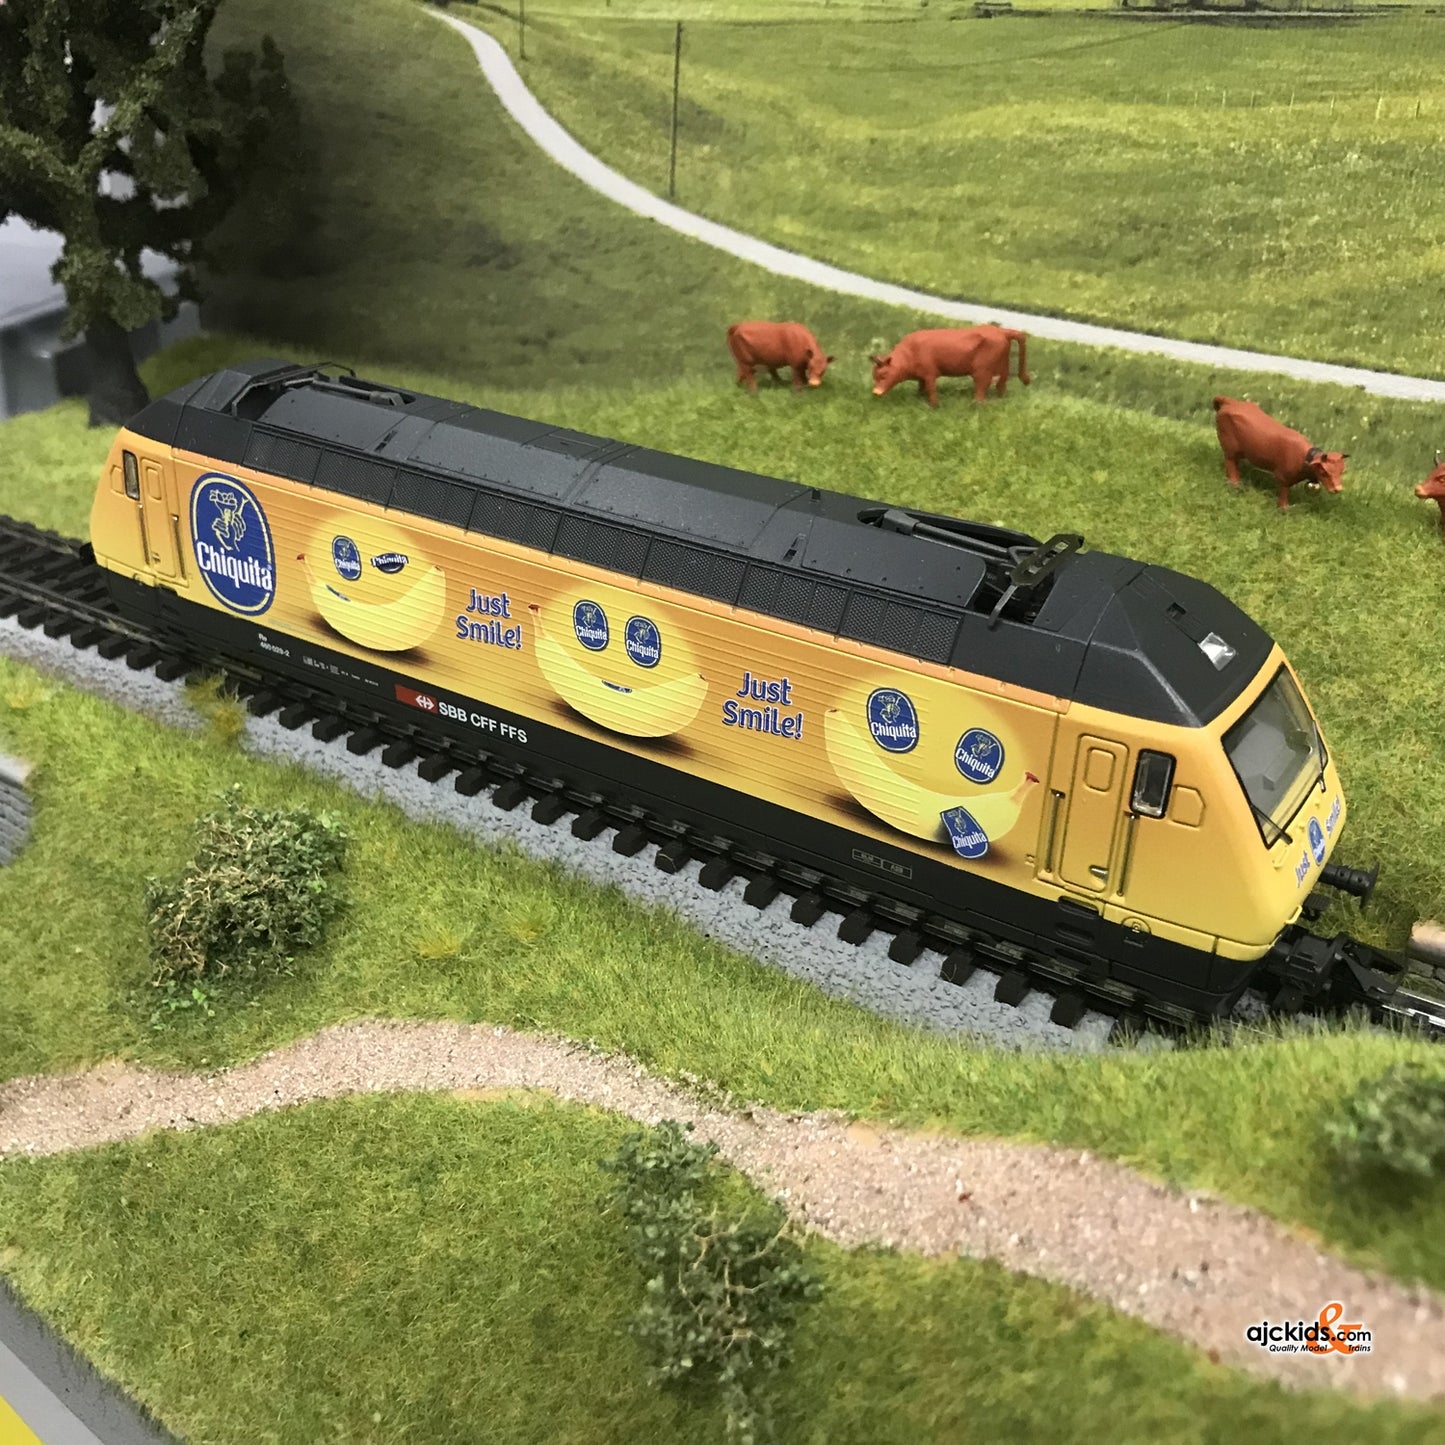 Marklin 39465 - Class Re 460 Electric Locomotive Chiquita